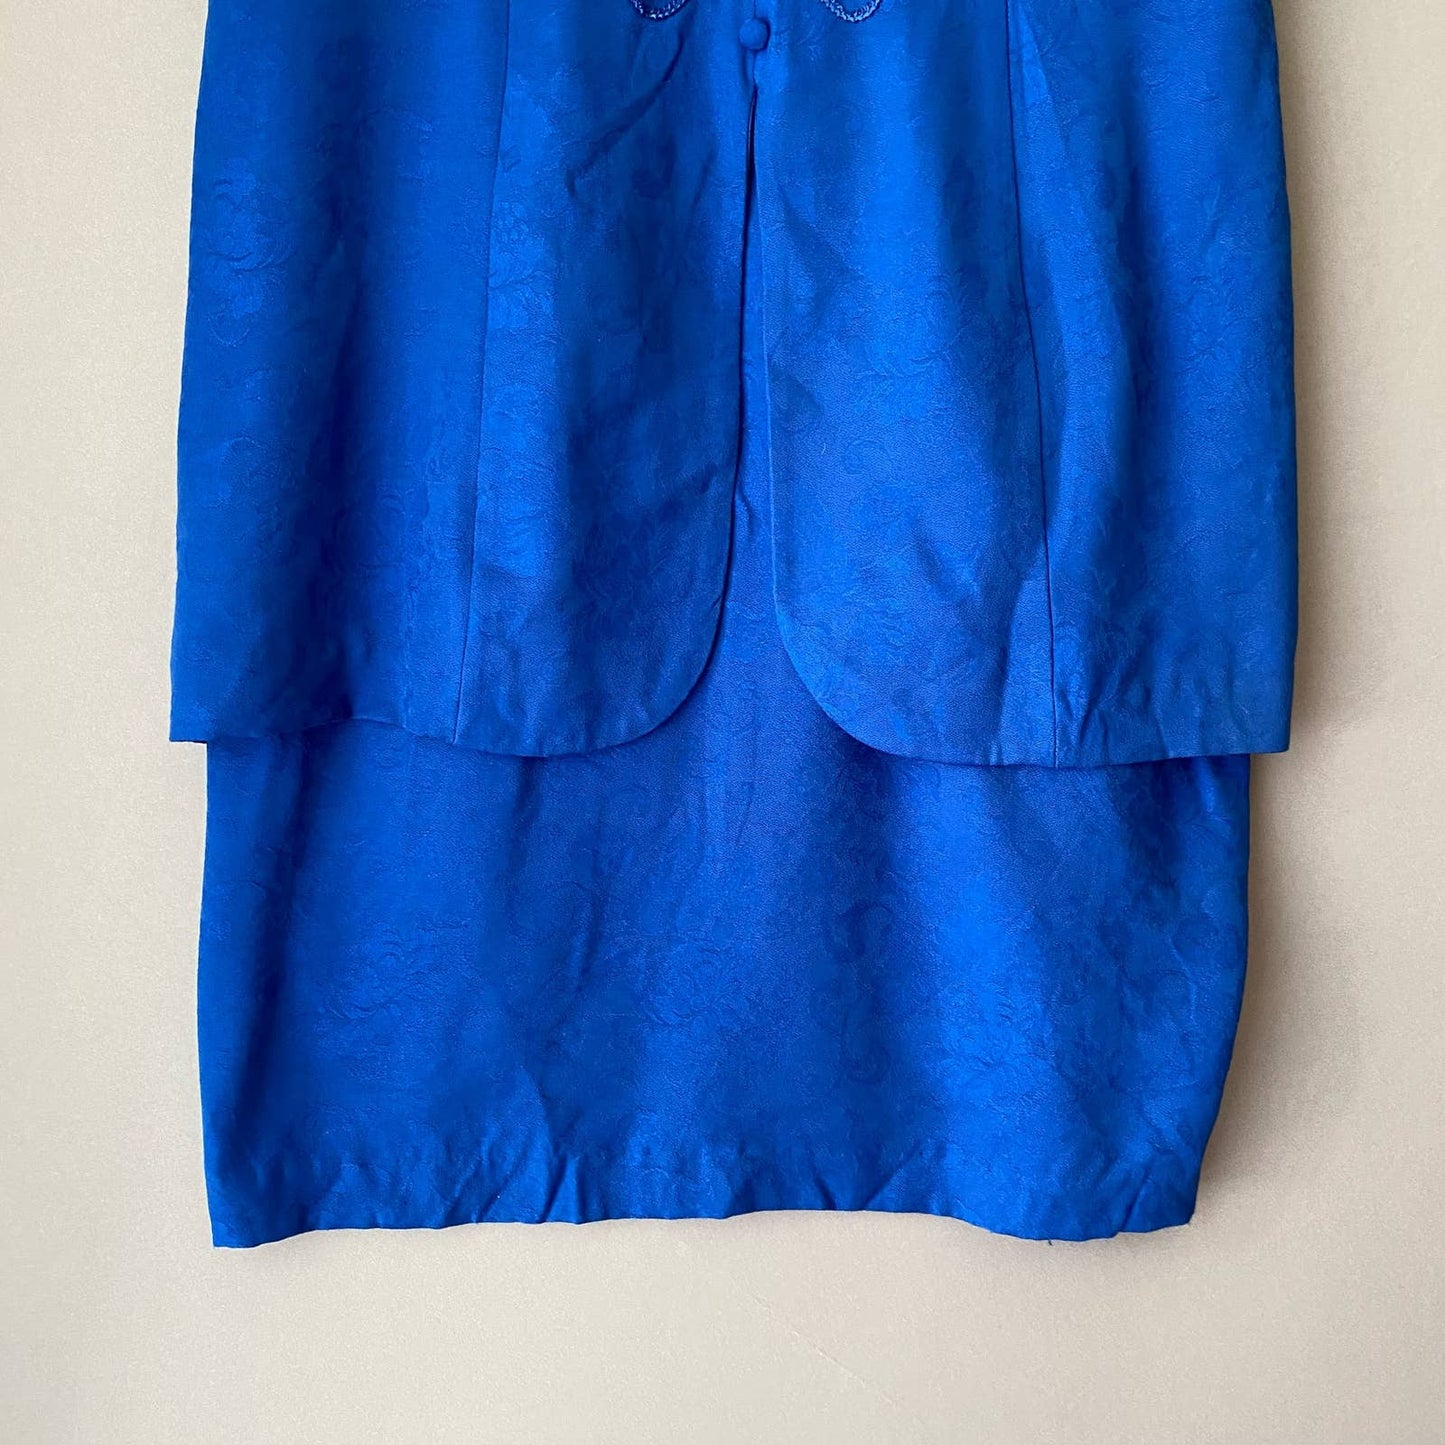 Miss Dorby sz 12 Vintage one-piece skirt suit set